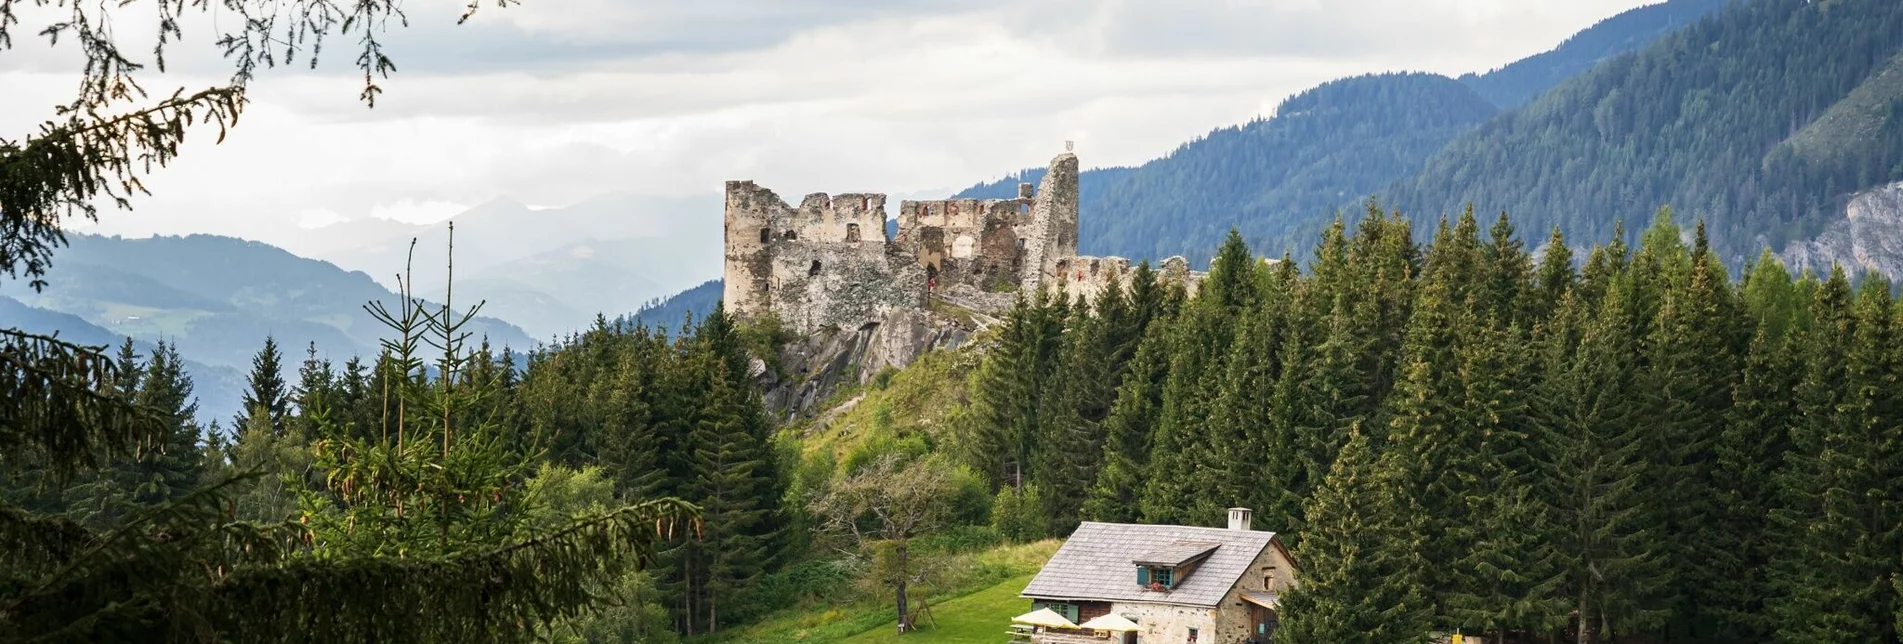 Wanderung Steinschloss-Runde - Touren-Impression #1 | © Tourismusverband Region Murau